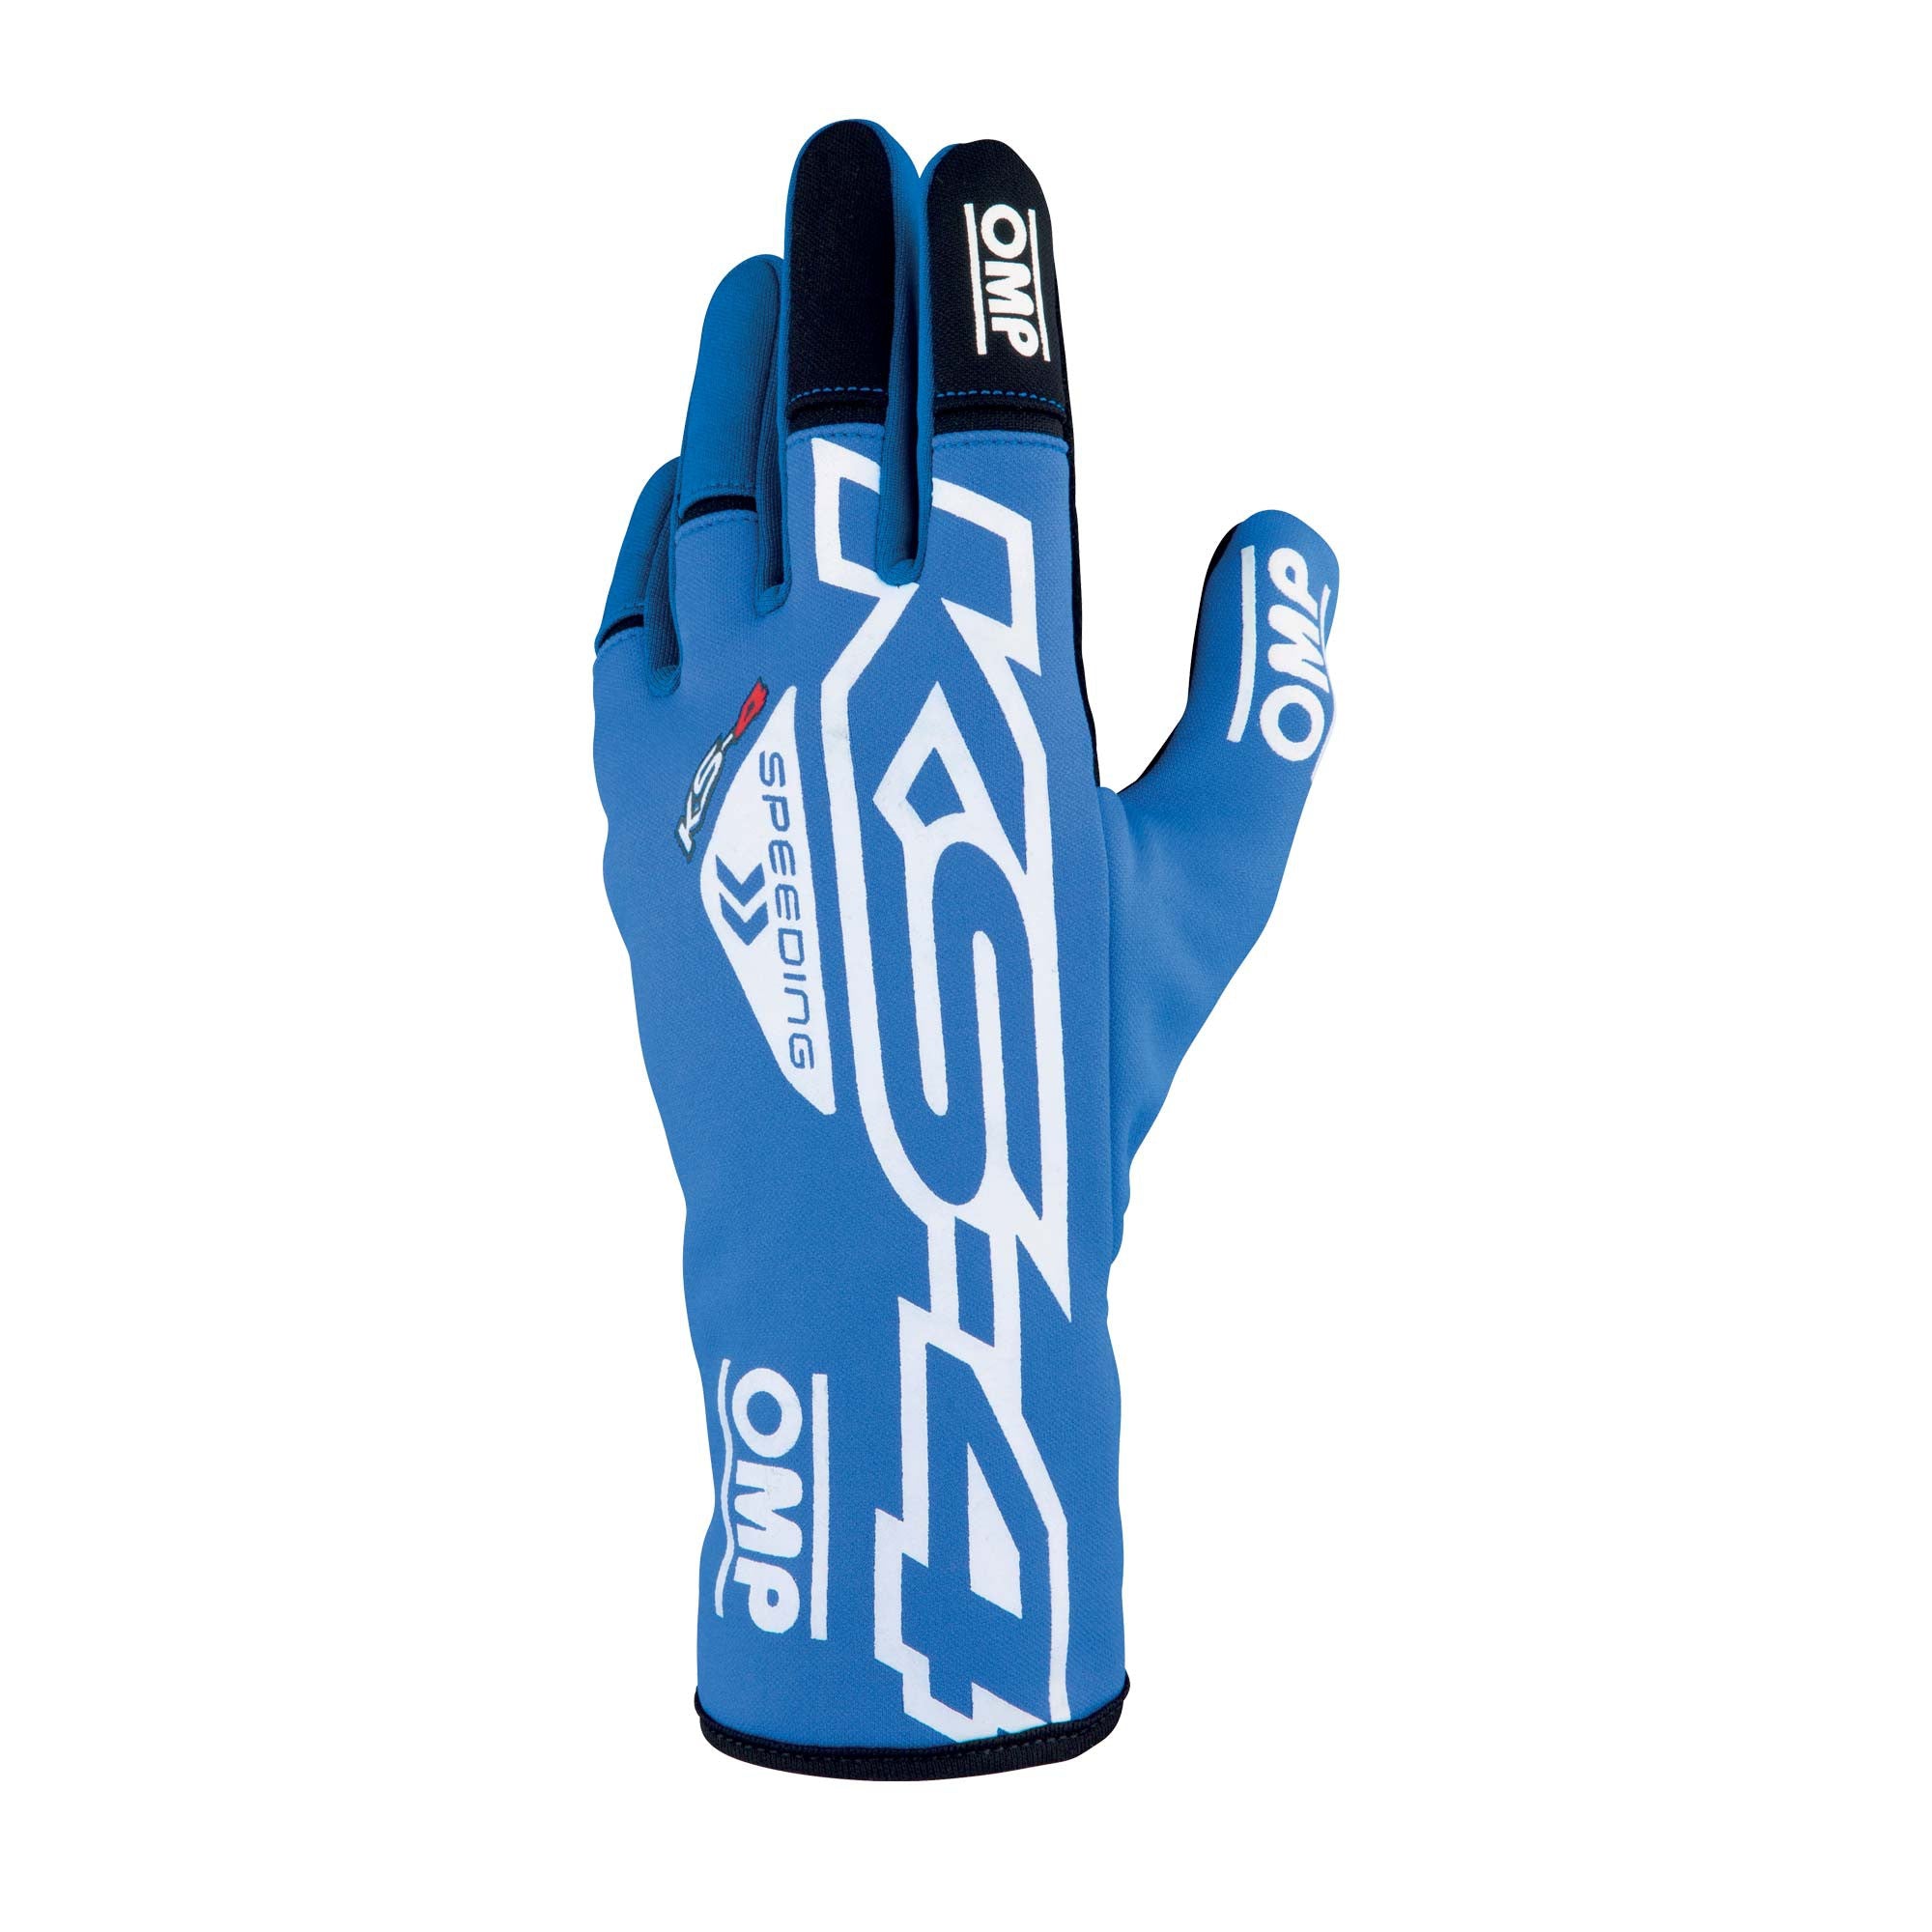 OMP KB0-2750-A01-043-XL KS-4 Gloves my2023 Karting gloves, blue/white, size XL Photo-0 